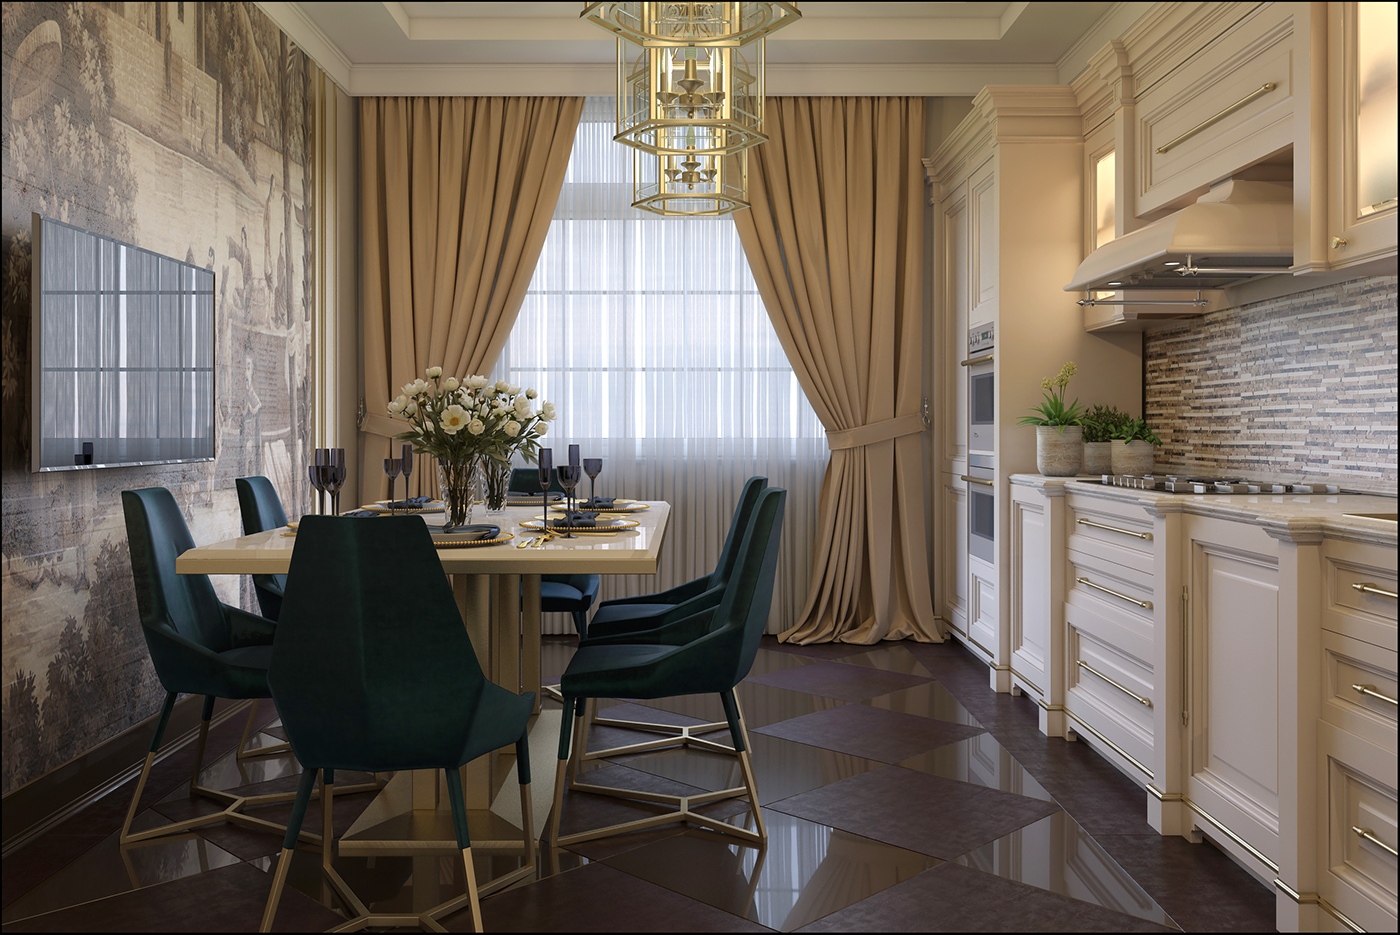 Interior luxury bedroom kitchen longhi chelini Savio Firmino de gournay